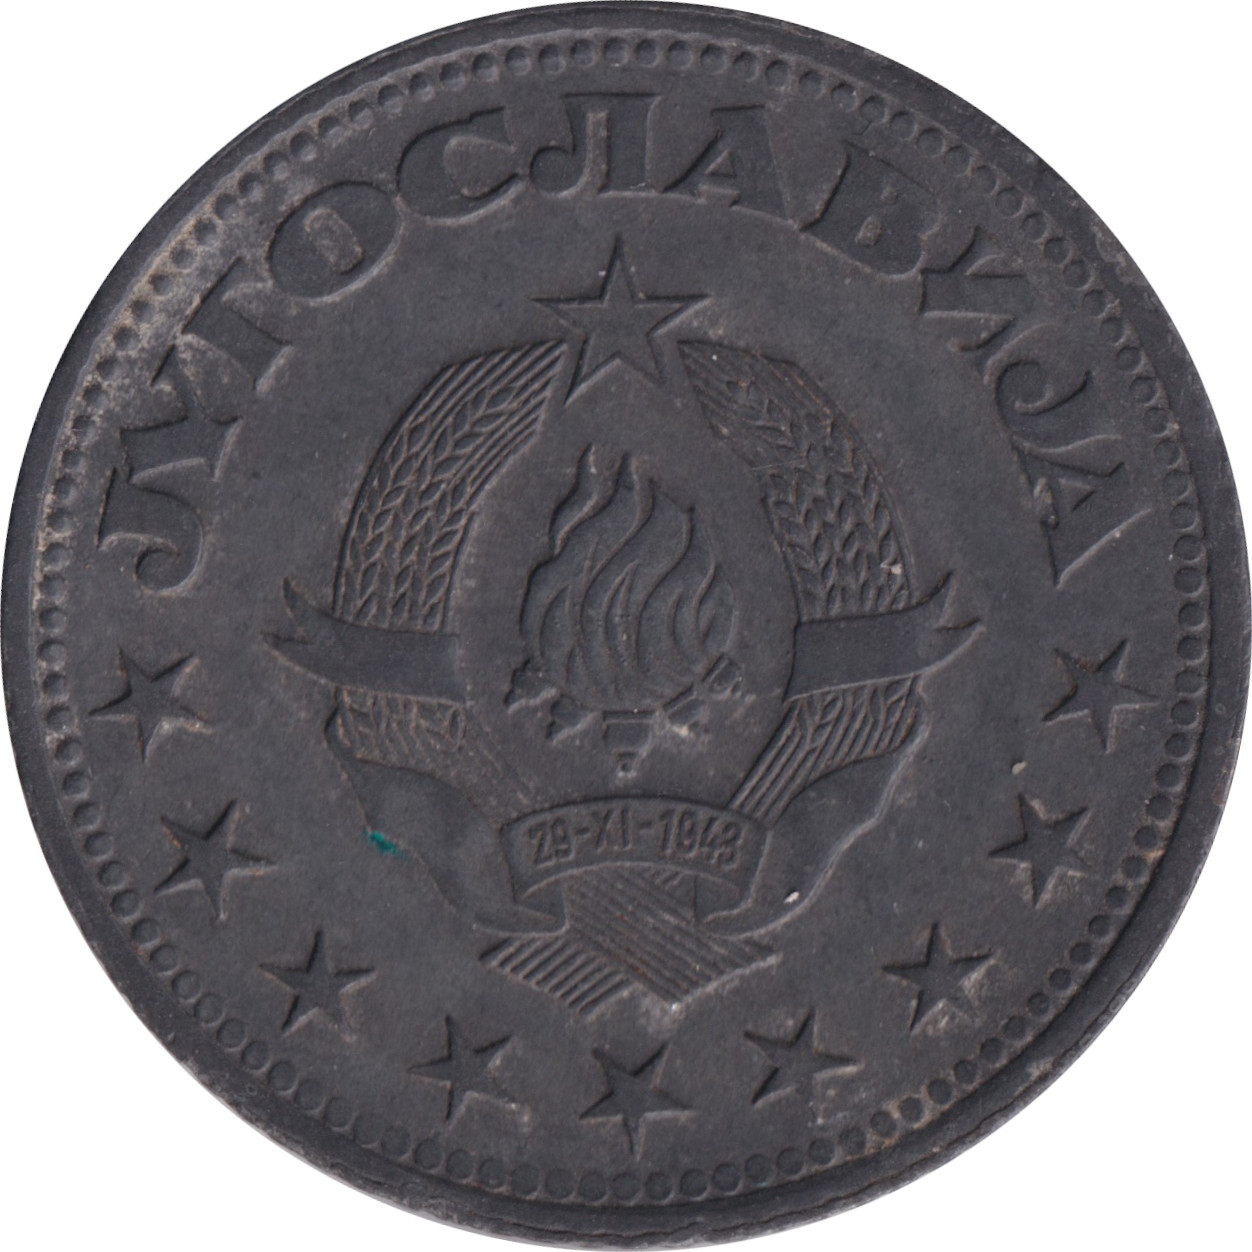 5 dinara - Emblem - Zinc